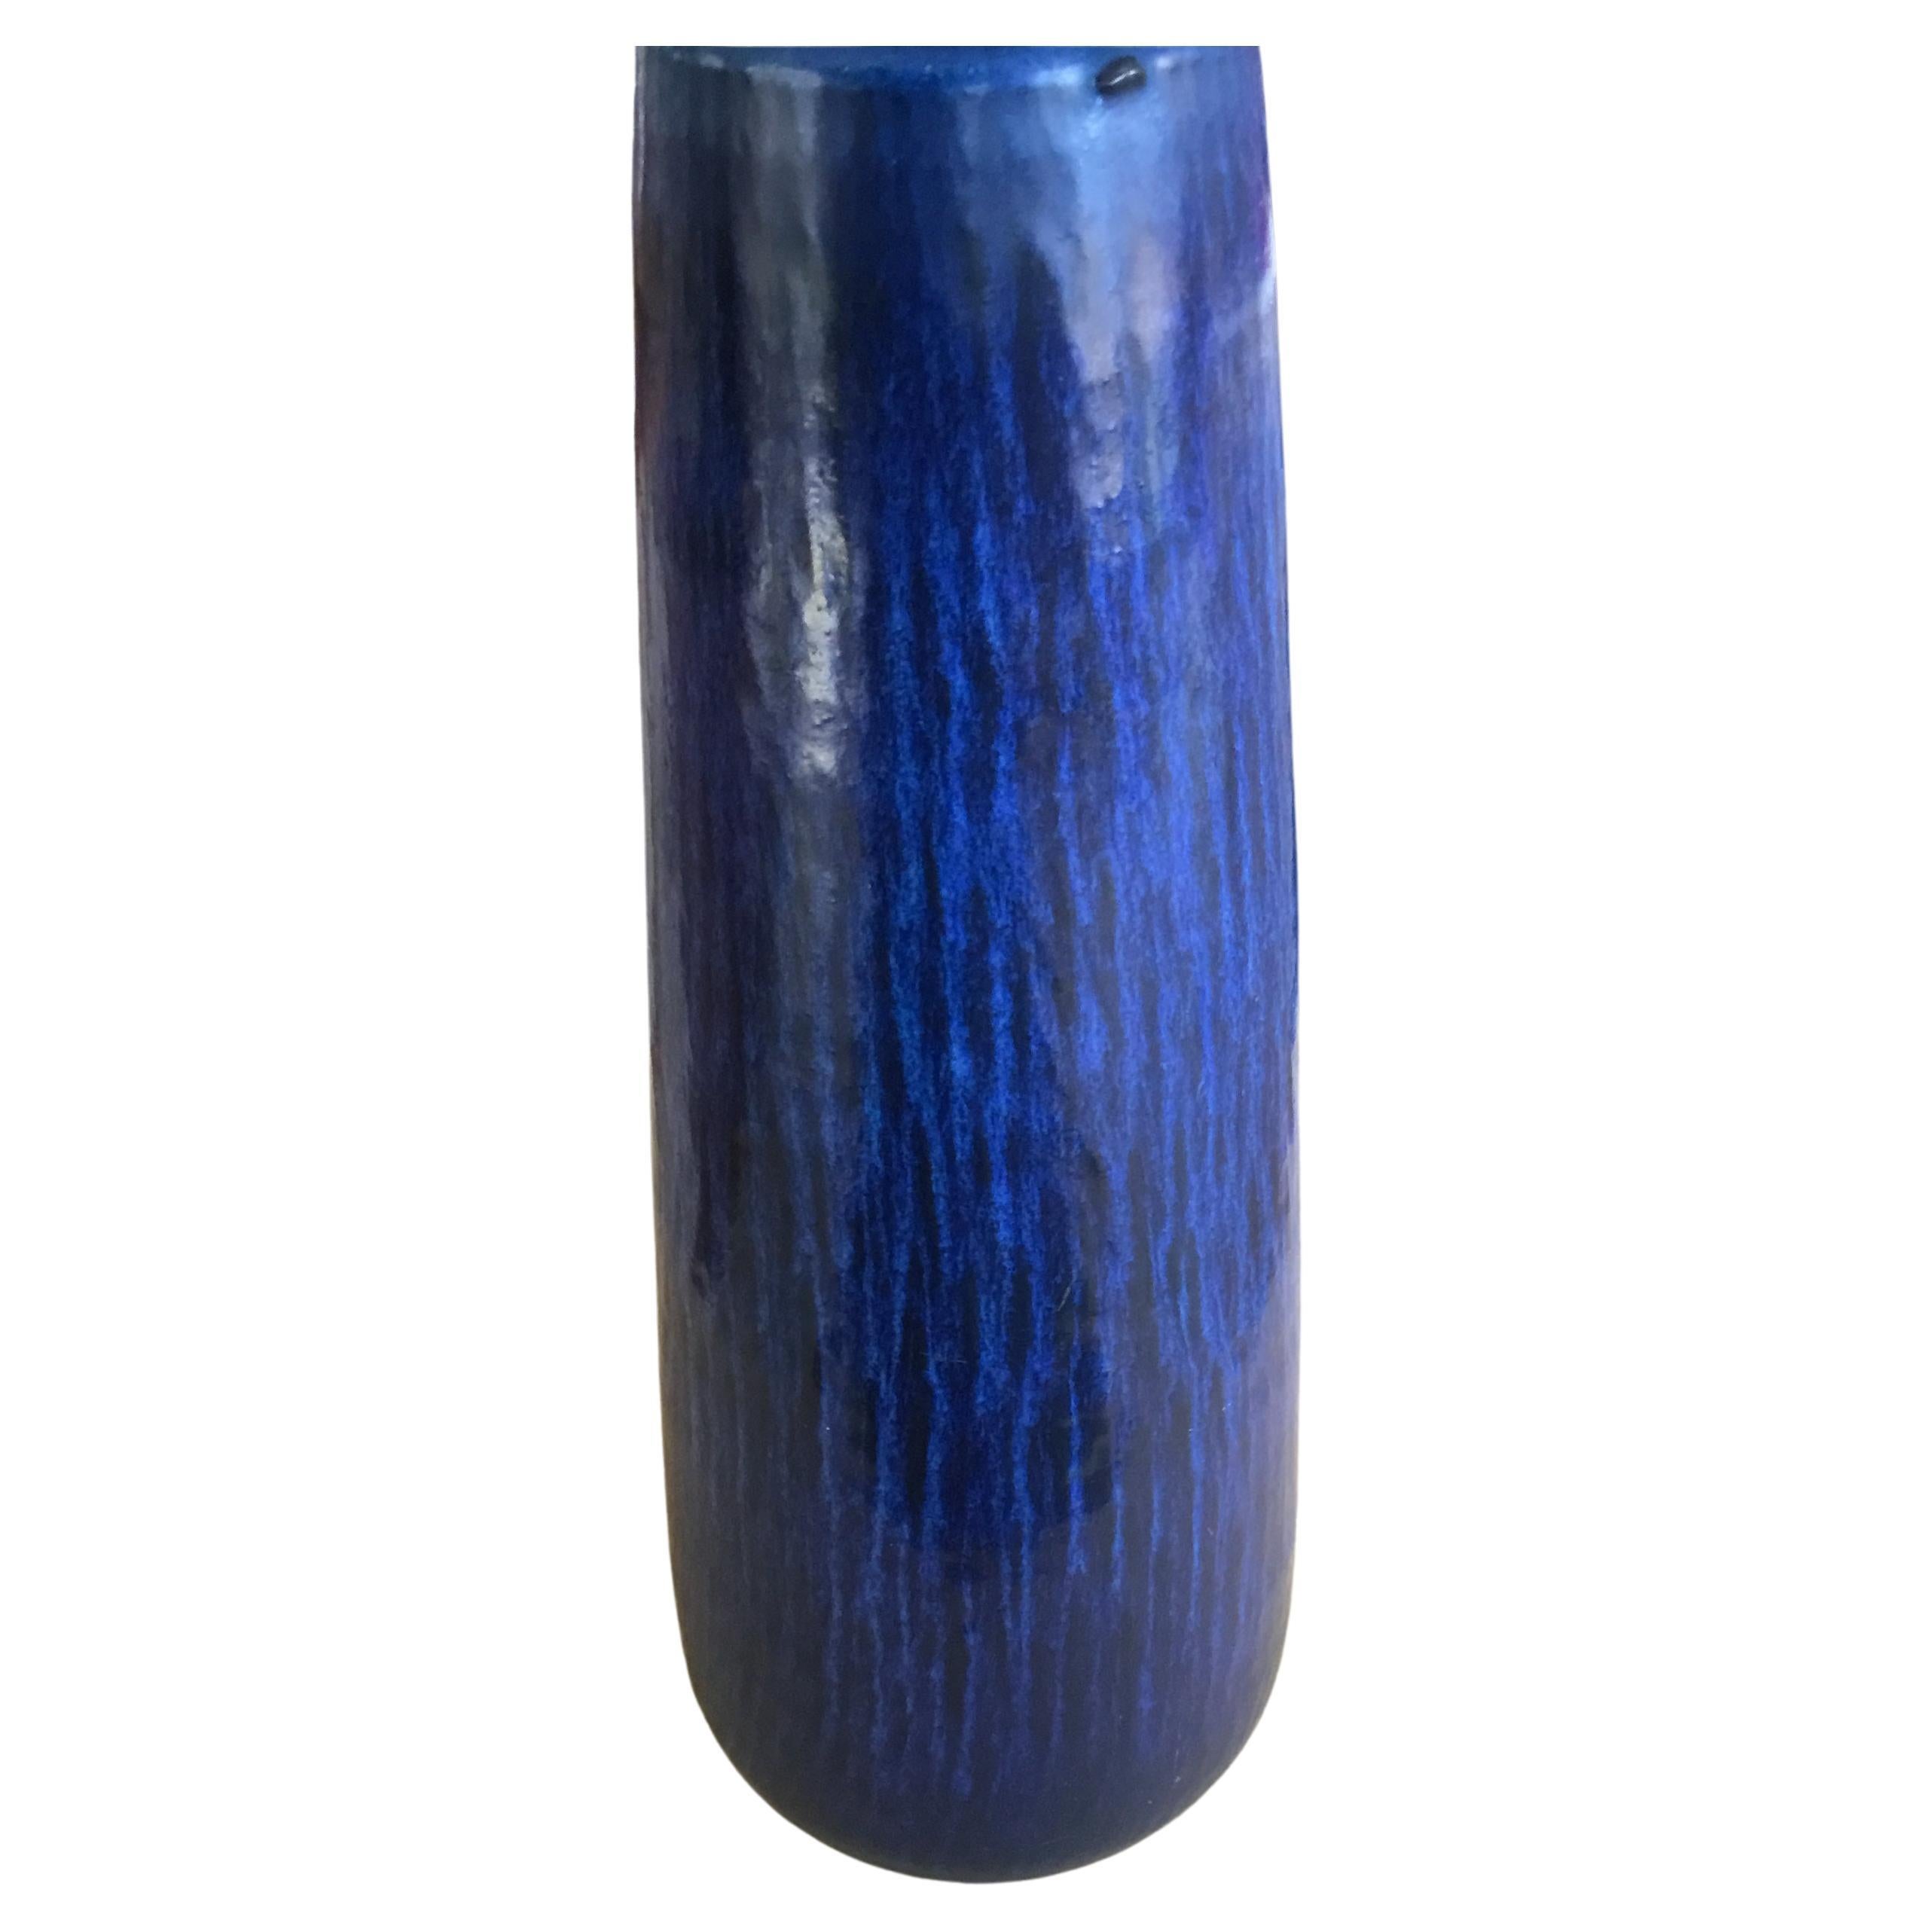 Very Tall Gunnar Nylund Vase by Nymølle with Dark Blue Glaze 1960s For Sale 1